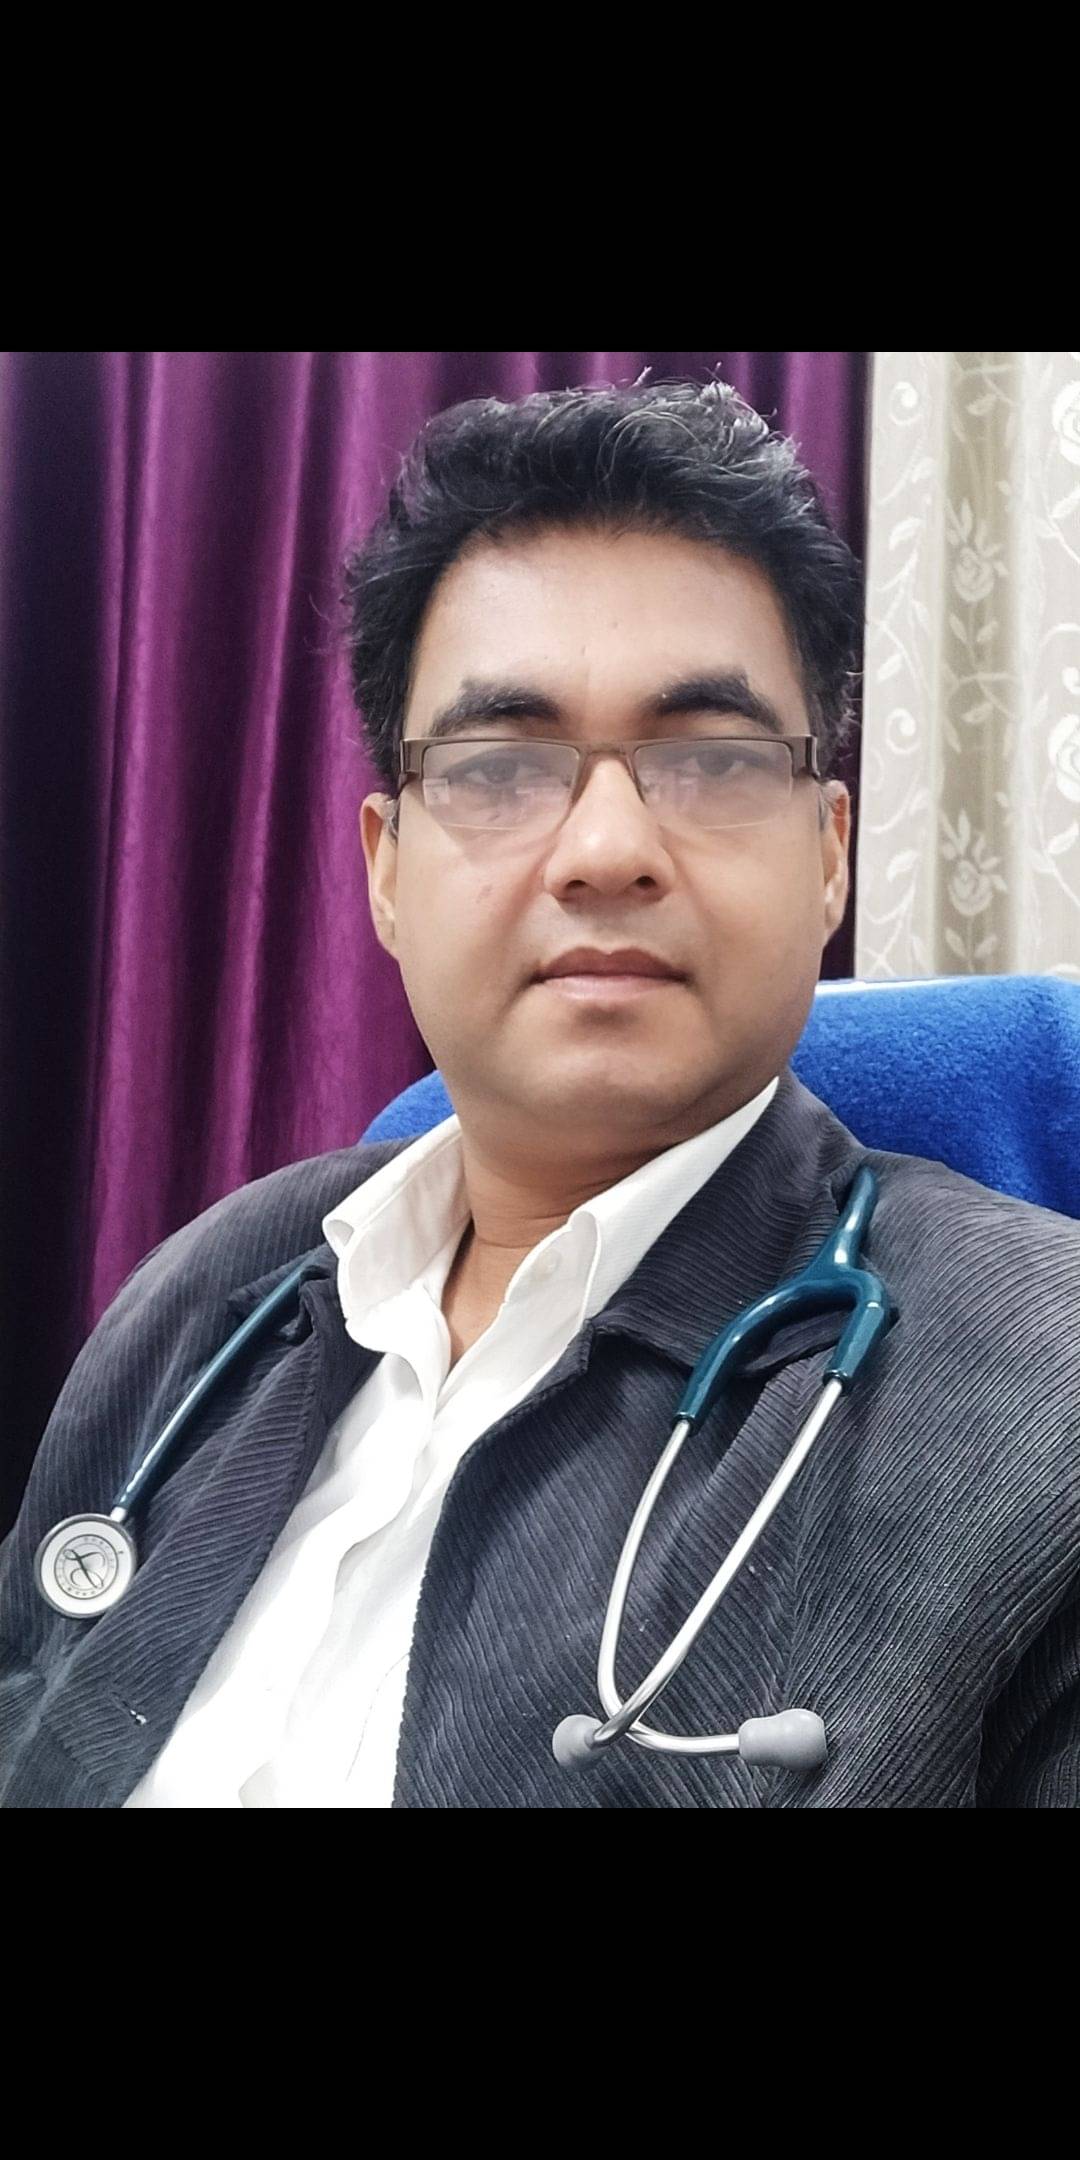 Child Specialist Doctor  Best Pediatrician in Kolkata